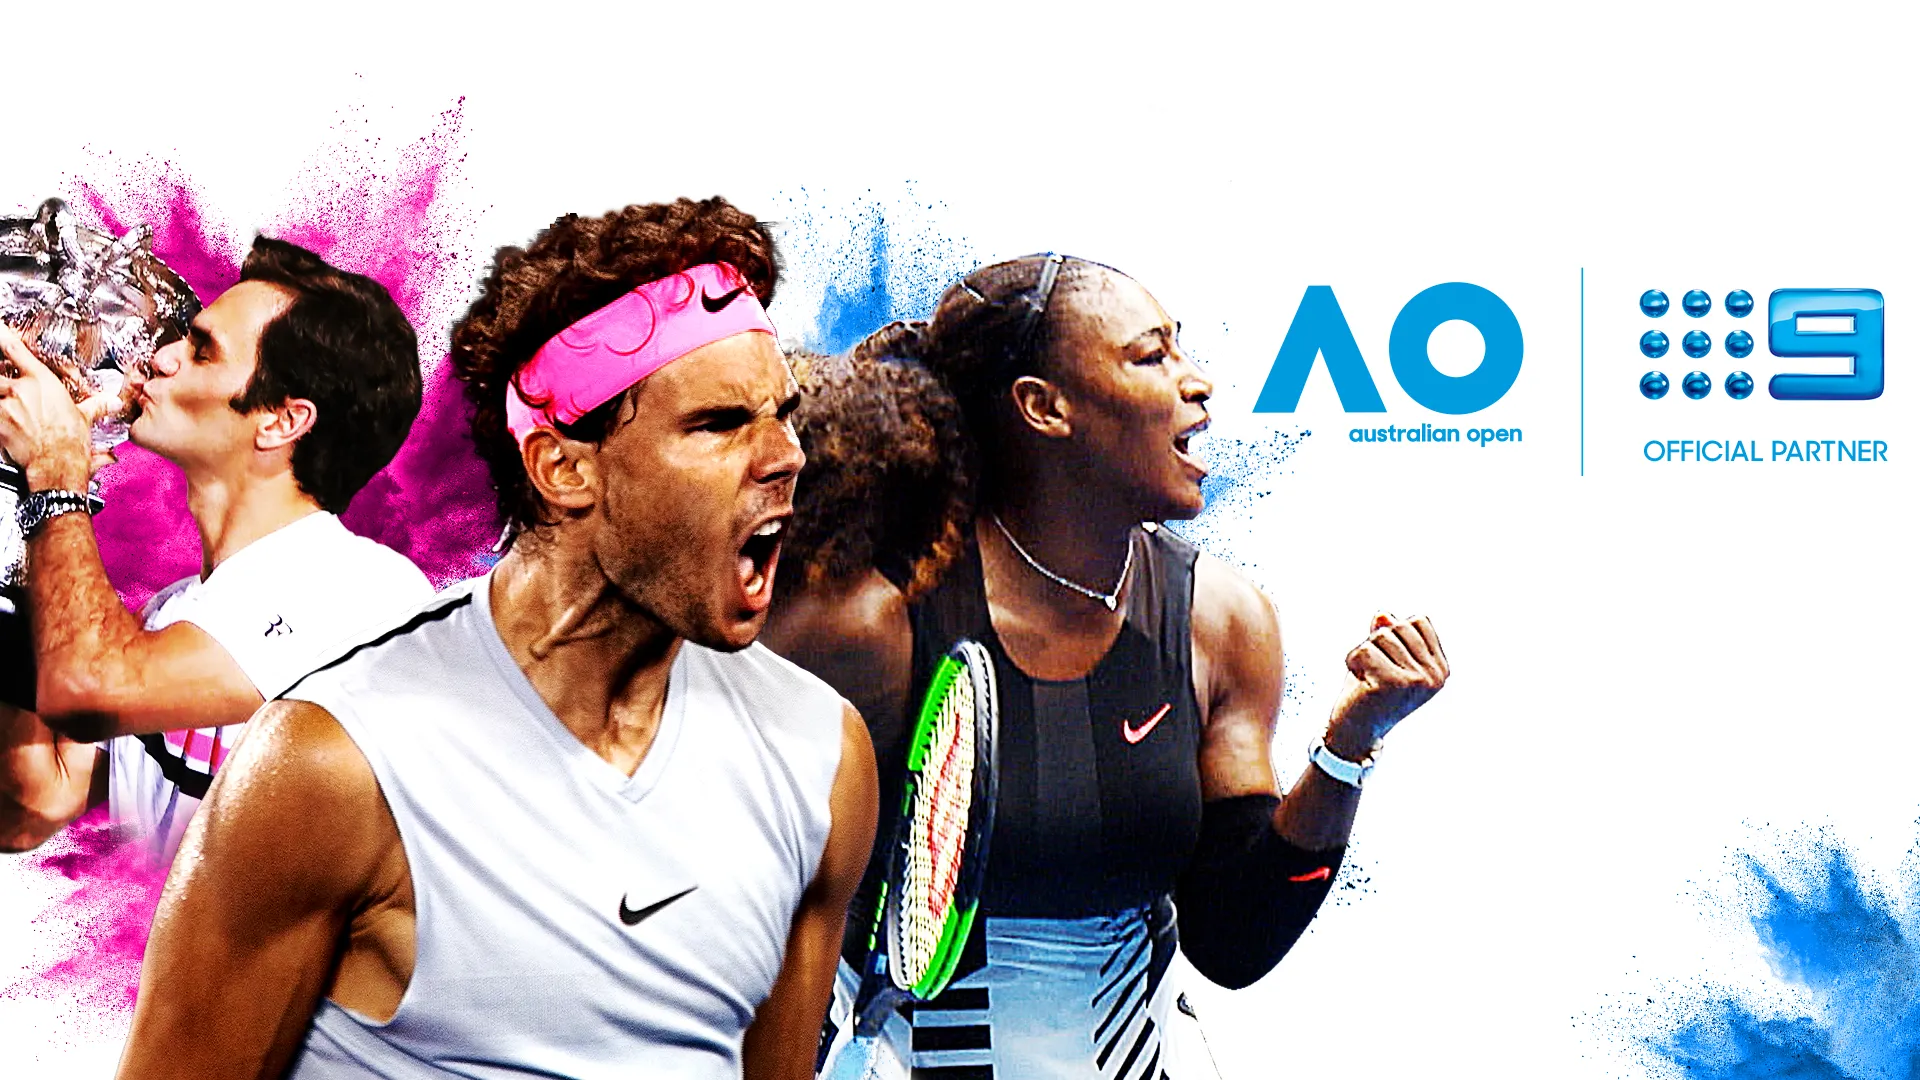 Australian Tennis 2019 Djokovic v Nadal - Men's Singles Final, TV Online